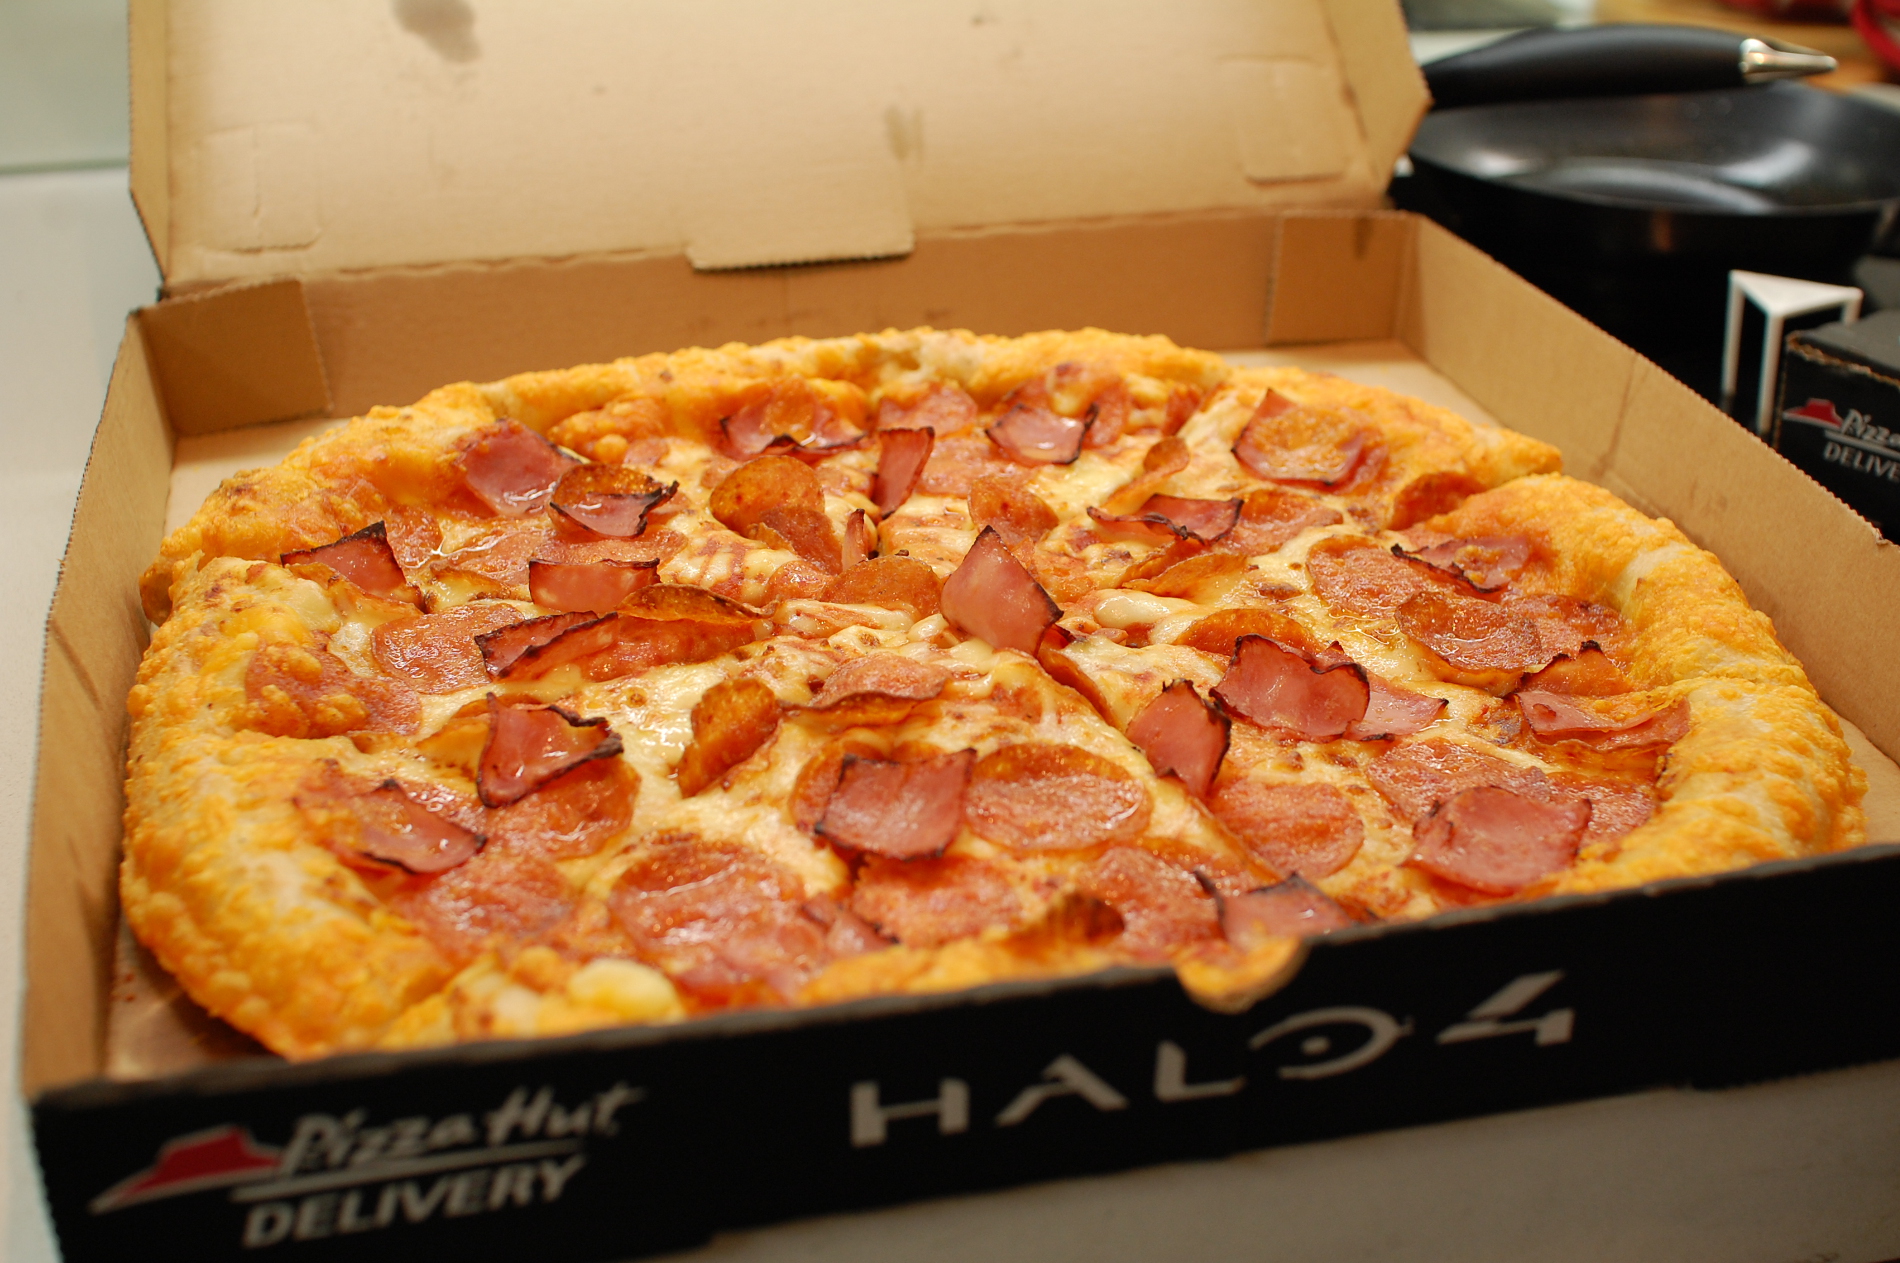 Halo 4 Stuffed Crust Pizza - The Pizza.